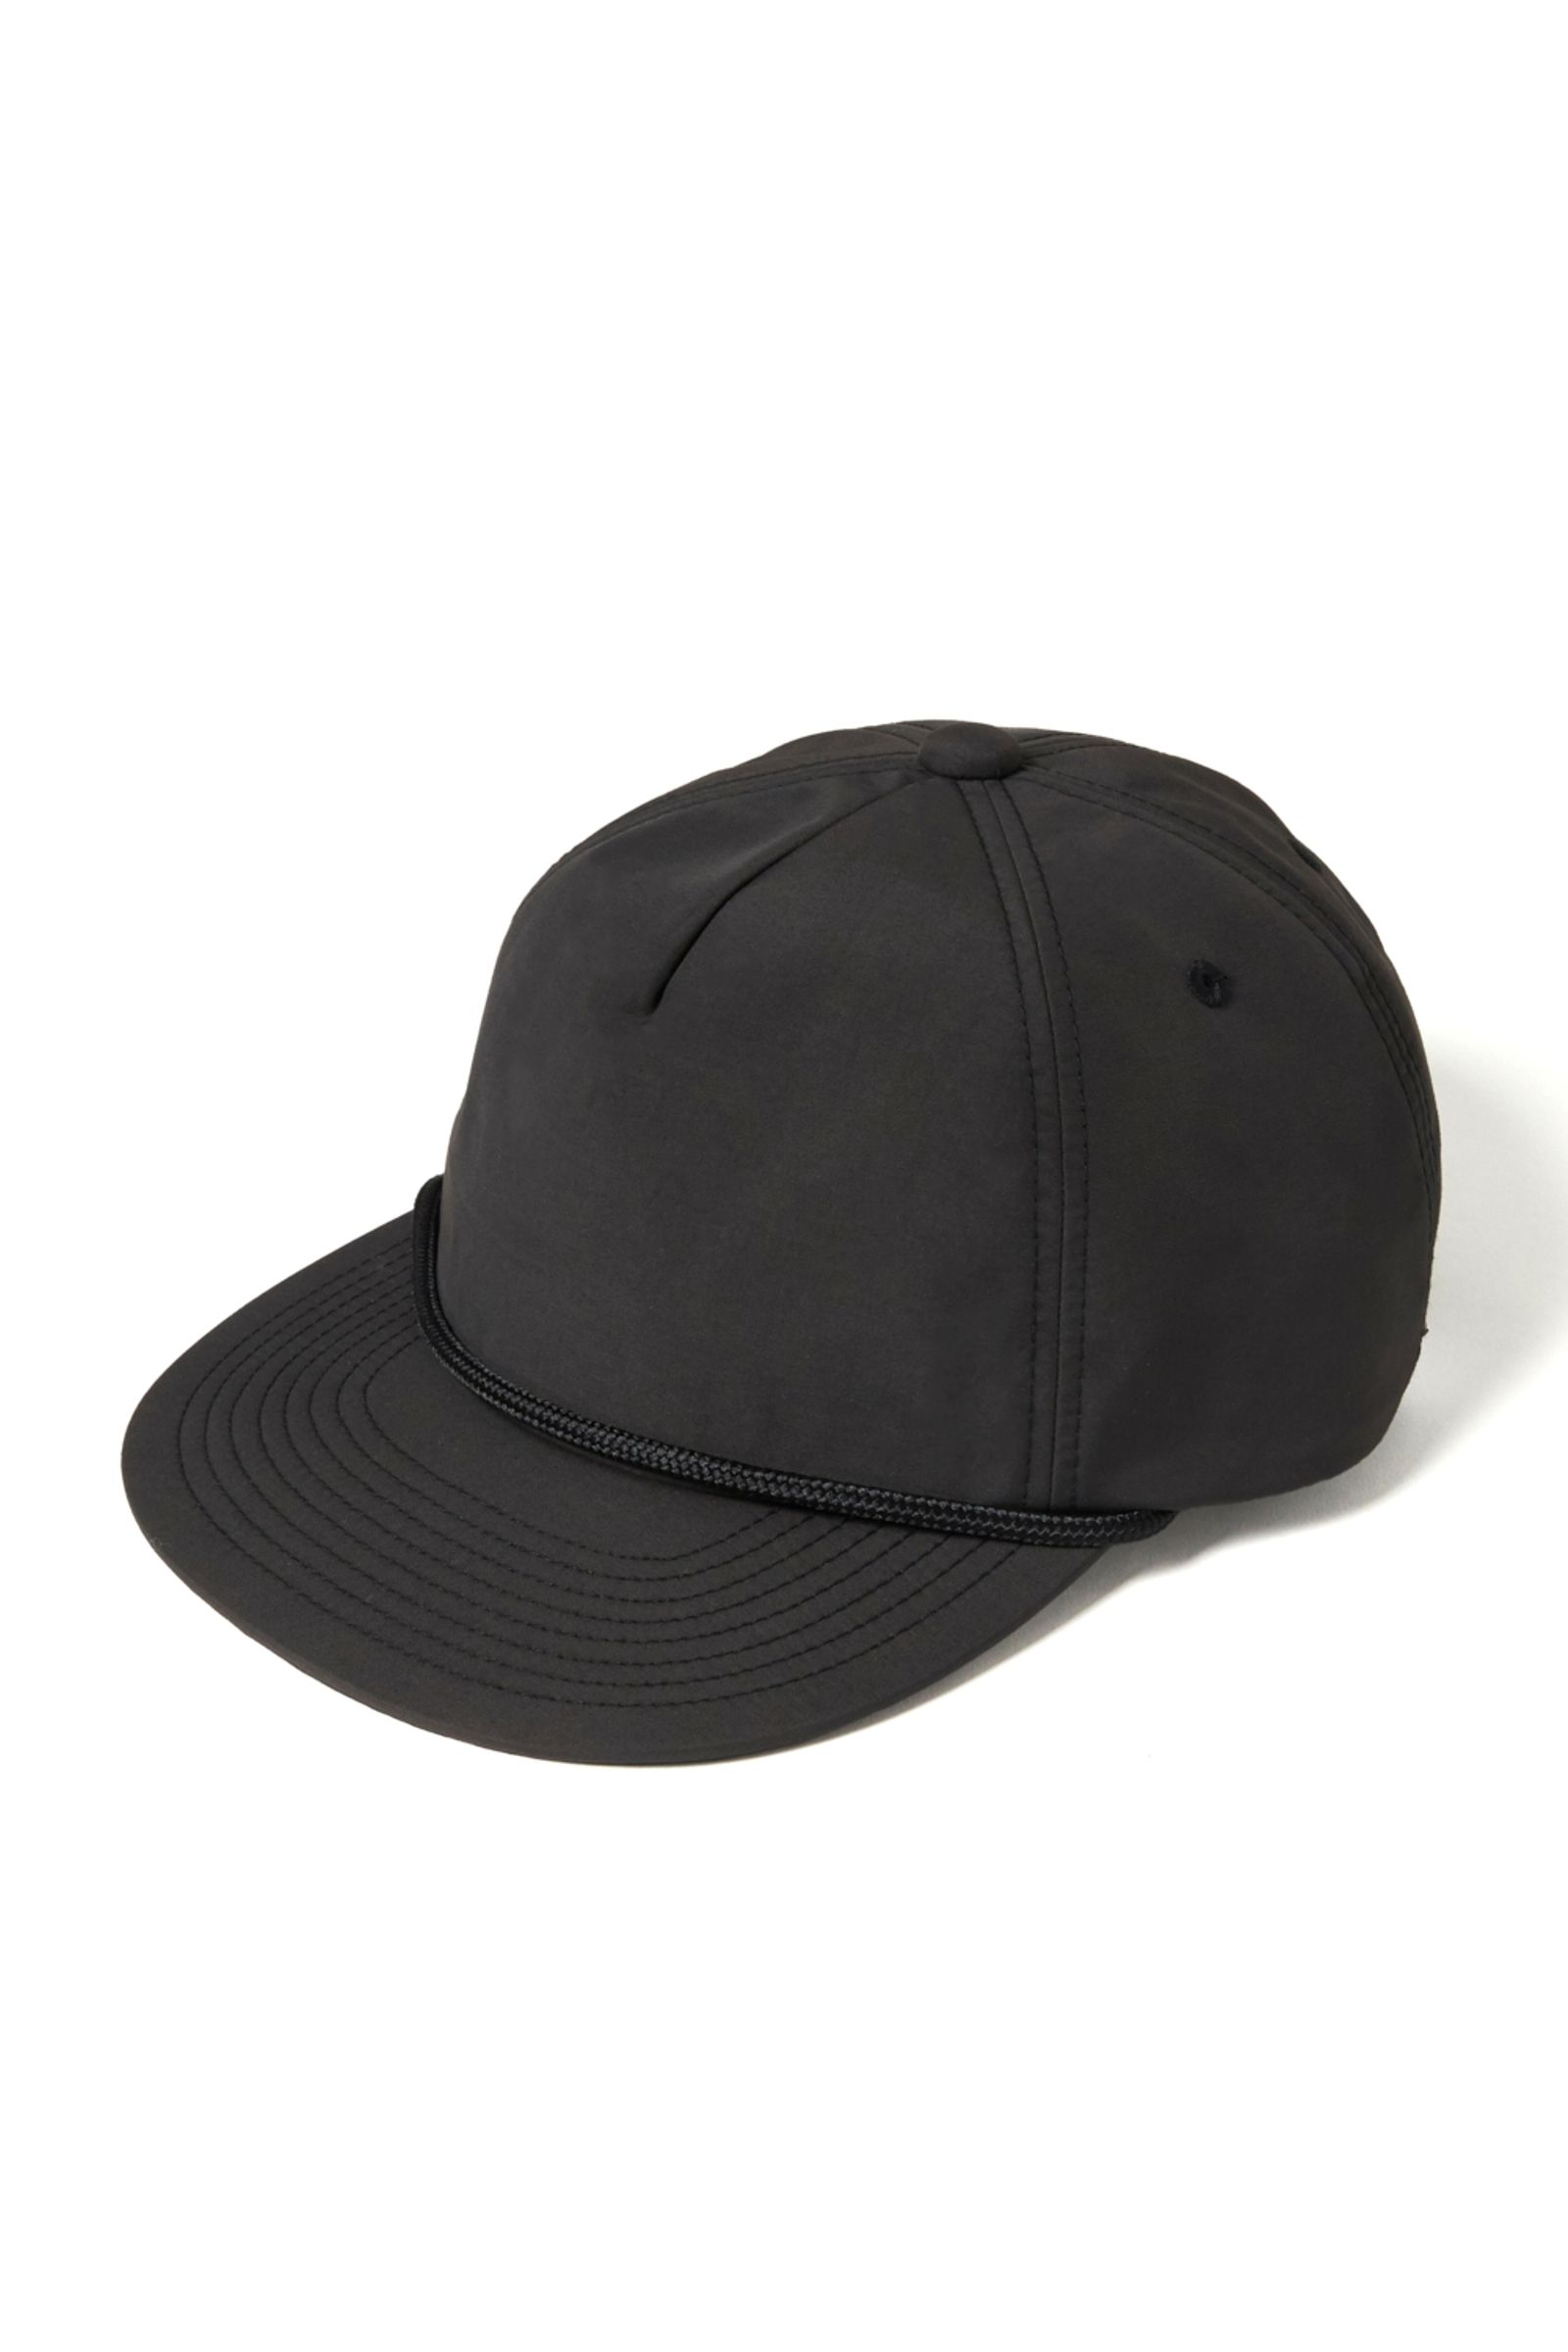 DAIWA PIER39 GORE-TEX TECH ANGLER'S CAP帽子